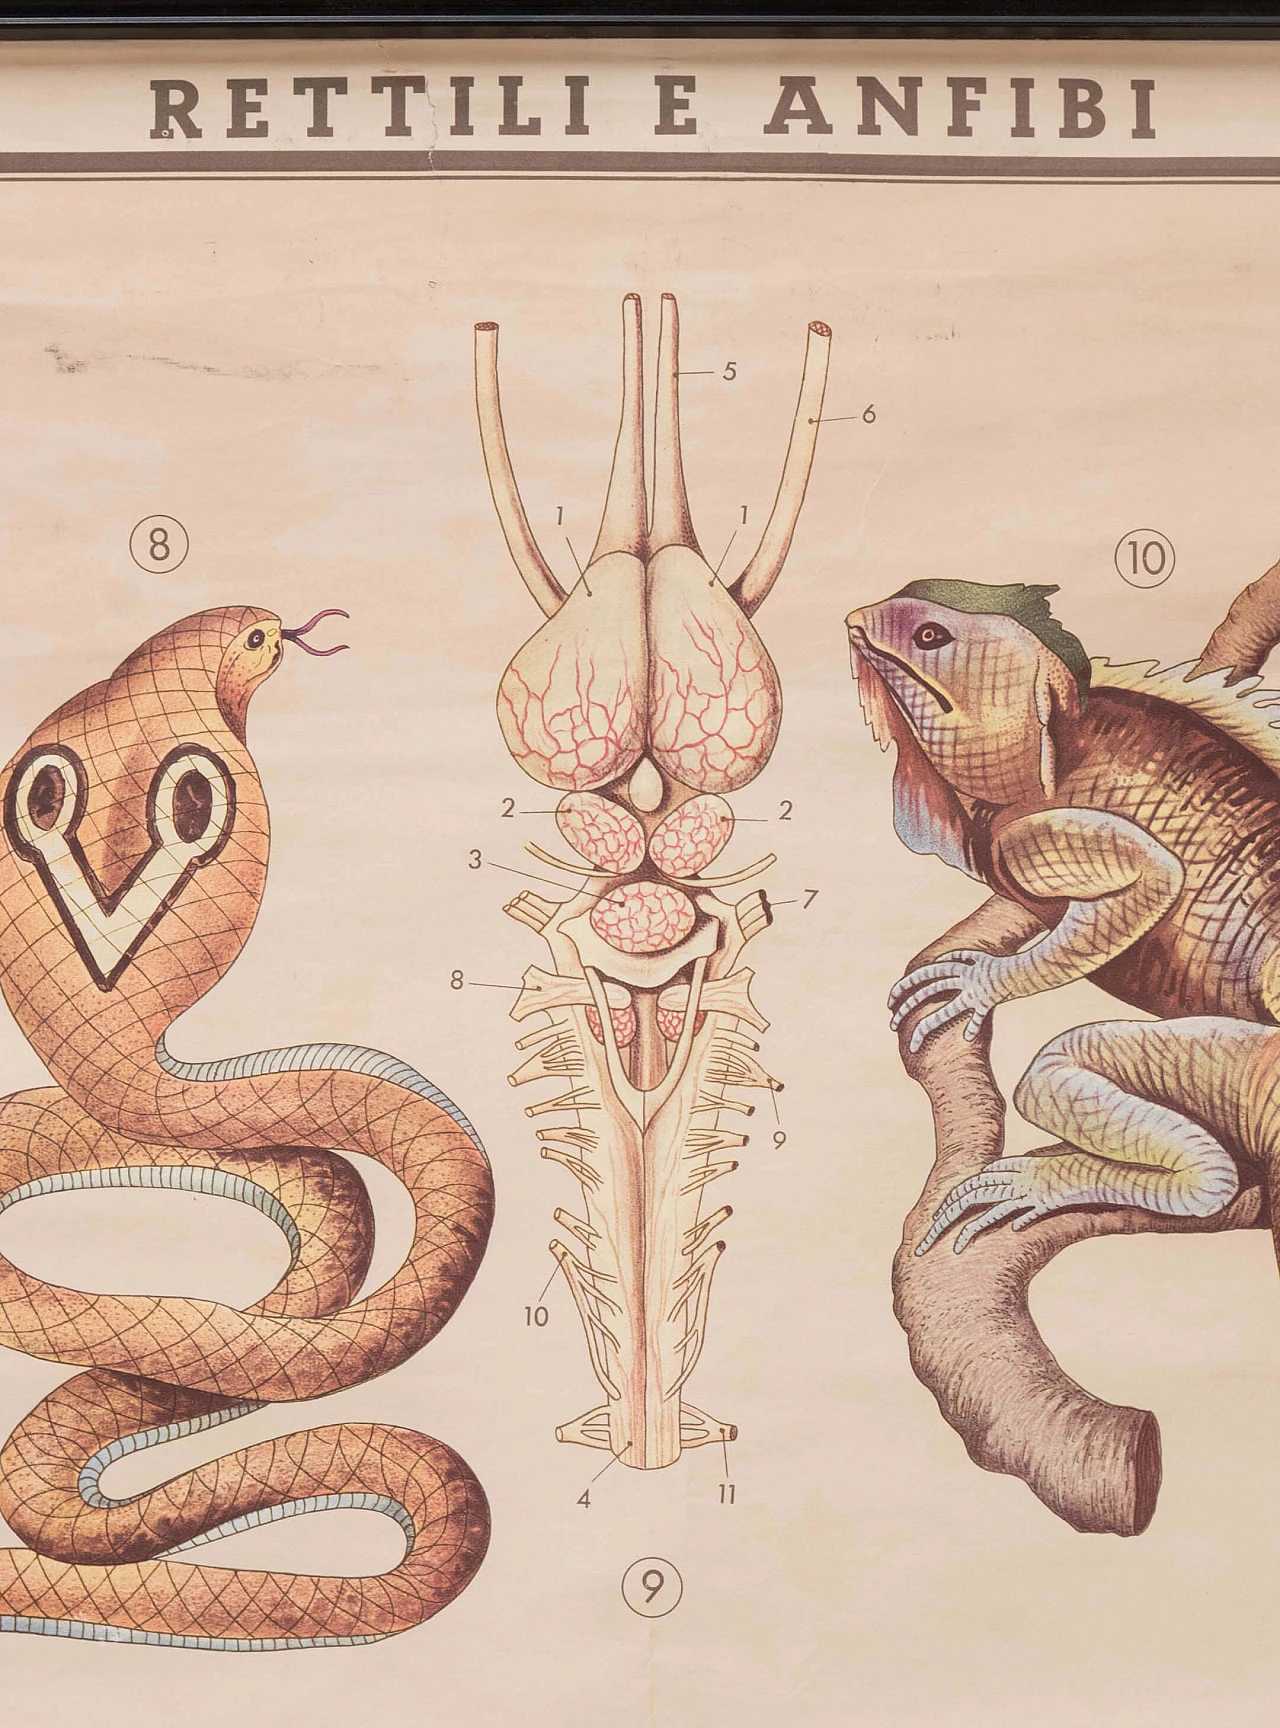 Reptile and amphibian themed educational print, Paravia, 1968 1088755